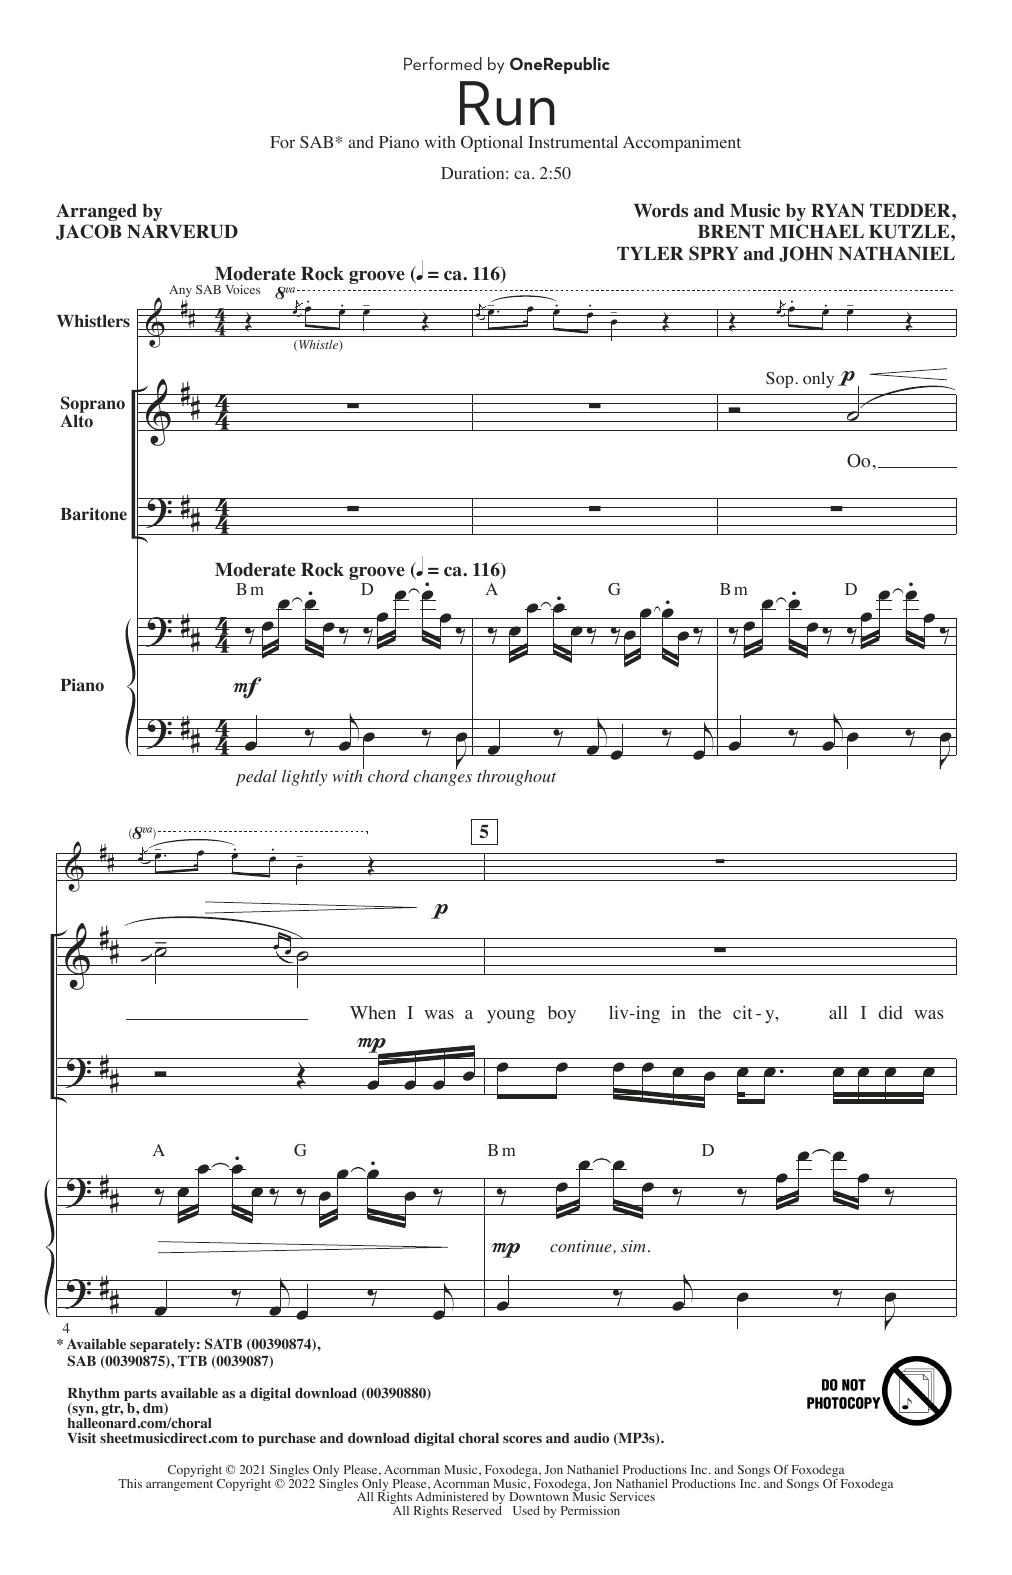 OneRepublic Run (arr. Jacob Narverud) Sheet Music Notes & Chords for SATB Choir - Download or Print PDF